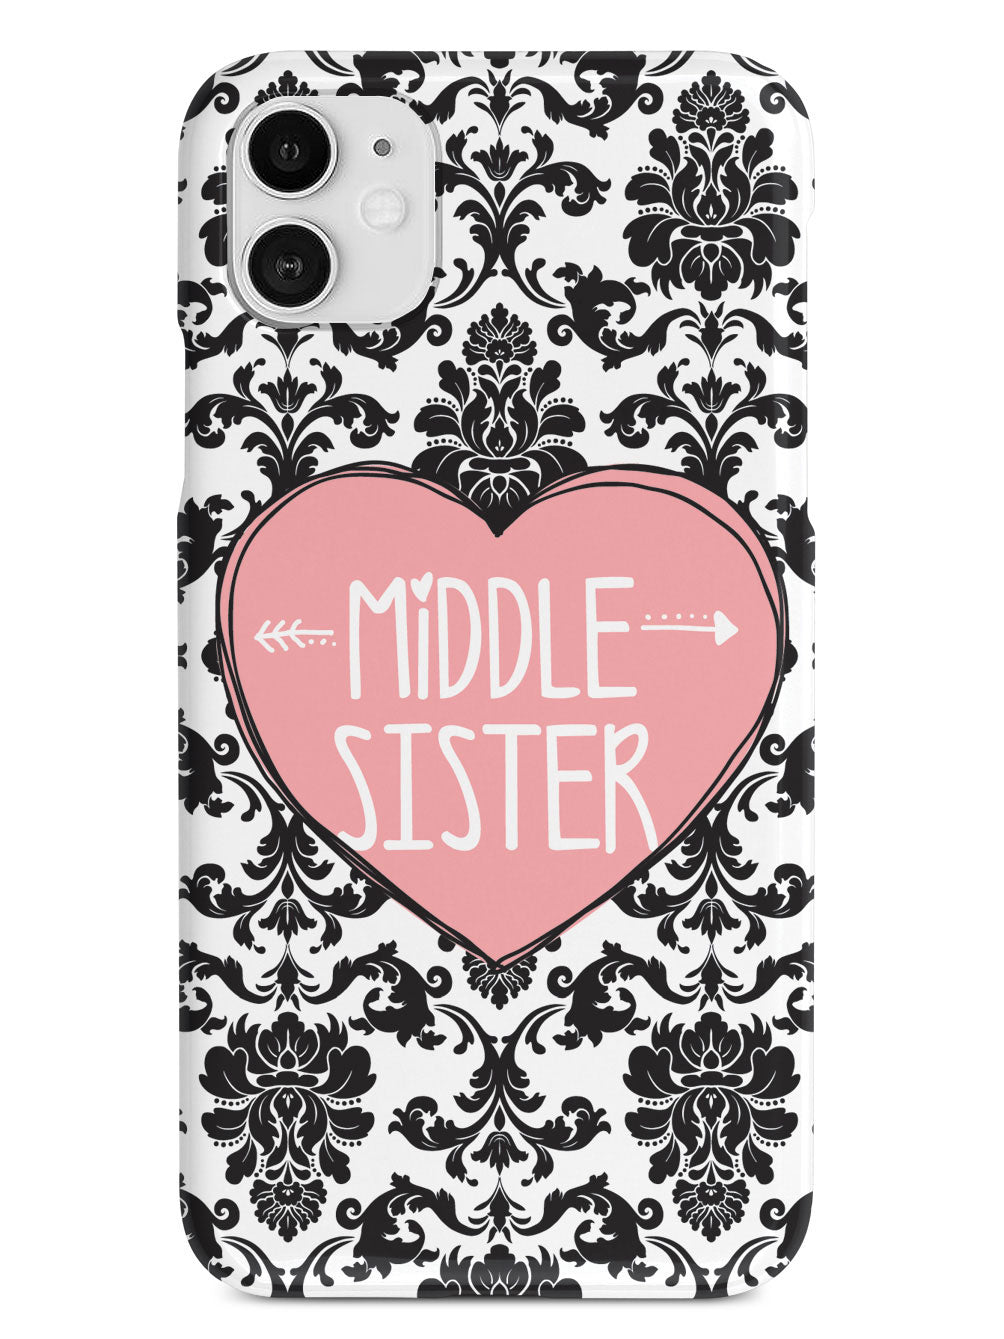 Sisterly Love - Middle Sister - Damask Case